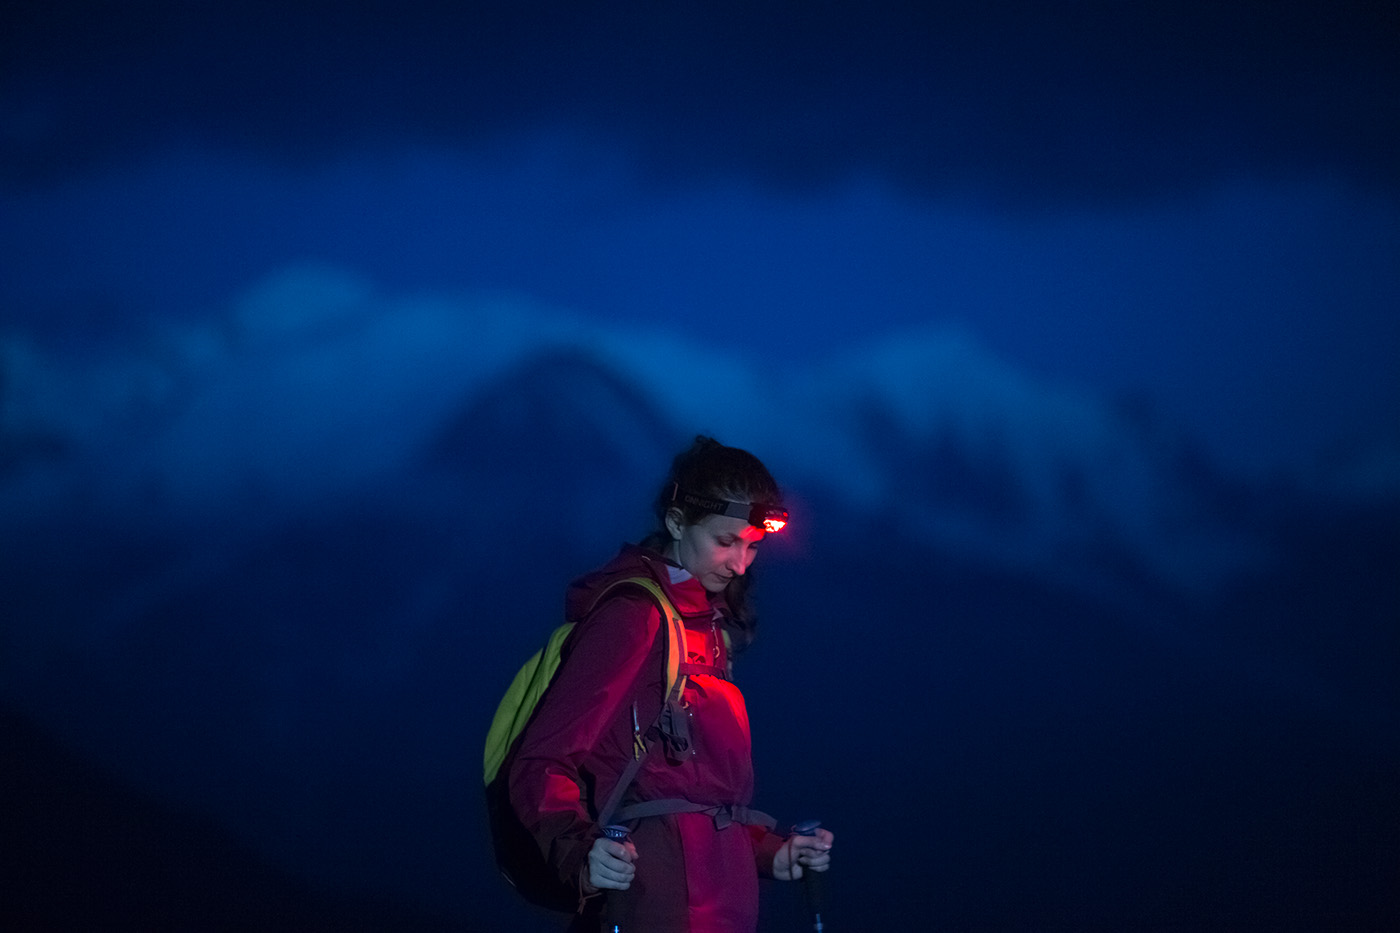 lighting geonaute decathlon chamonix onnight trekking running headlamp night light